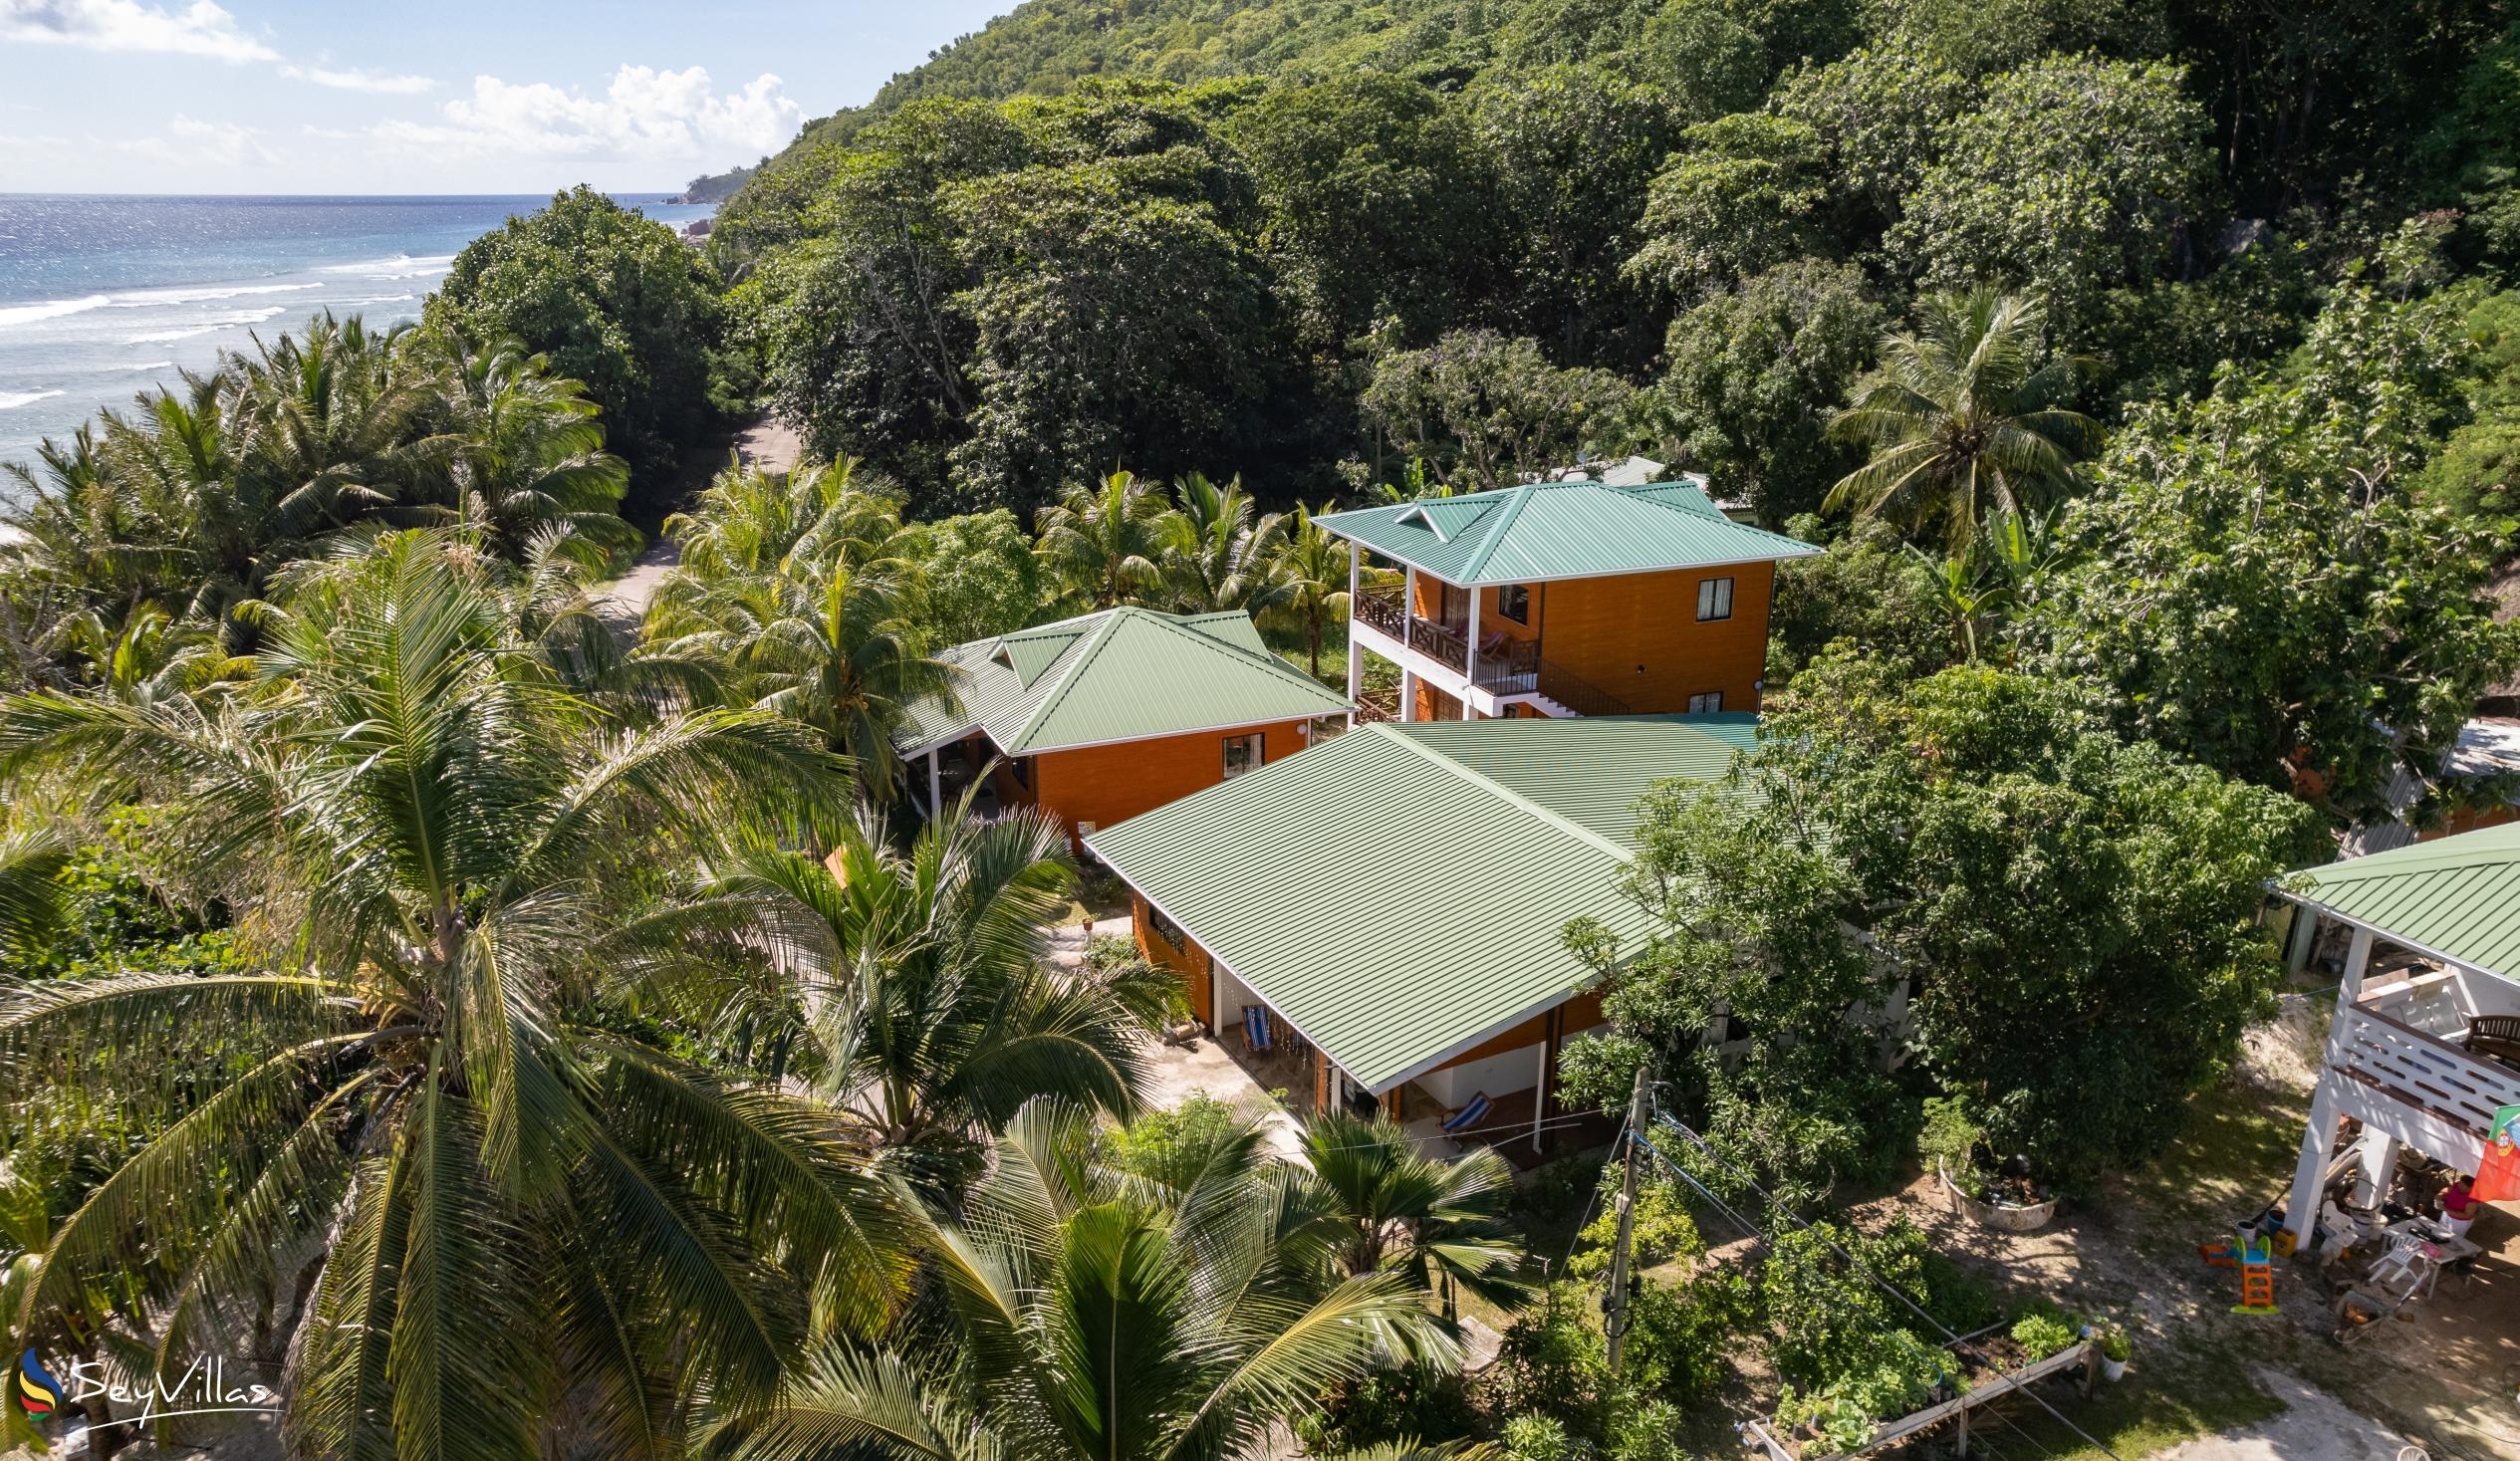 Foto 19: Anse Grosse Roche Beach Villa - Aussenbereich - La Digue (Seychellen)